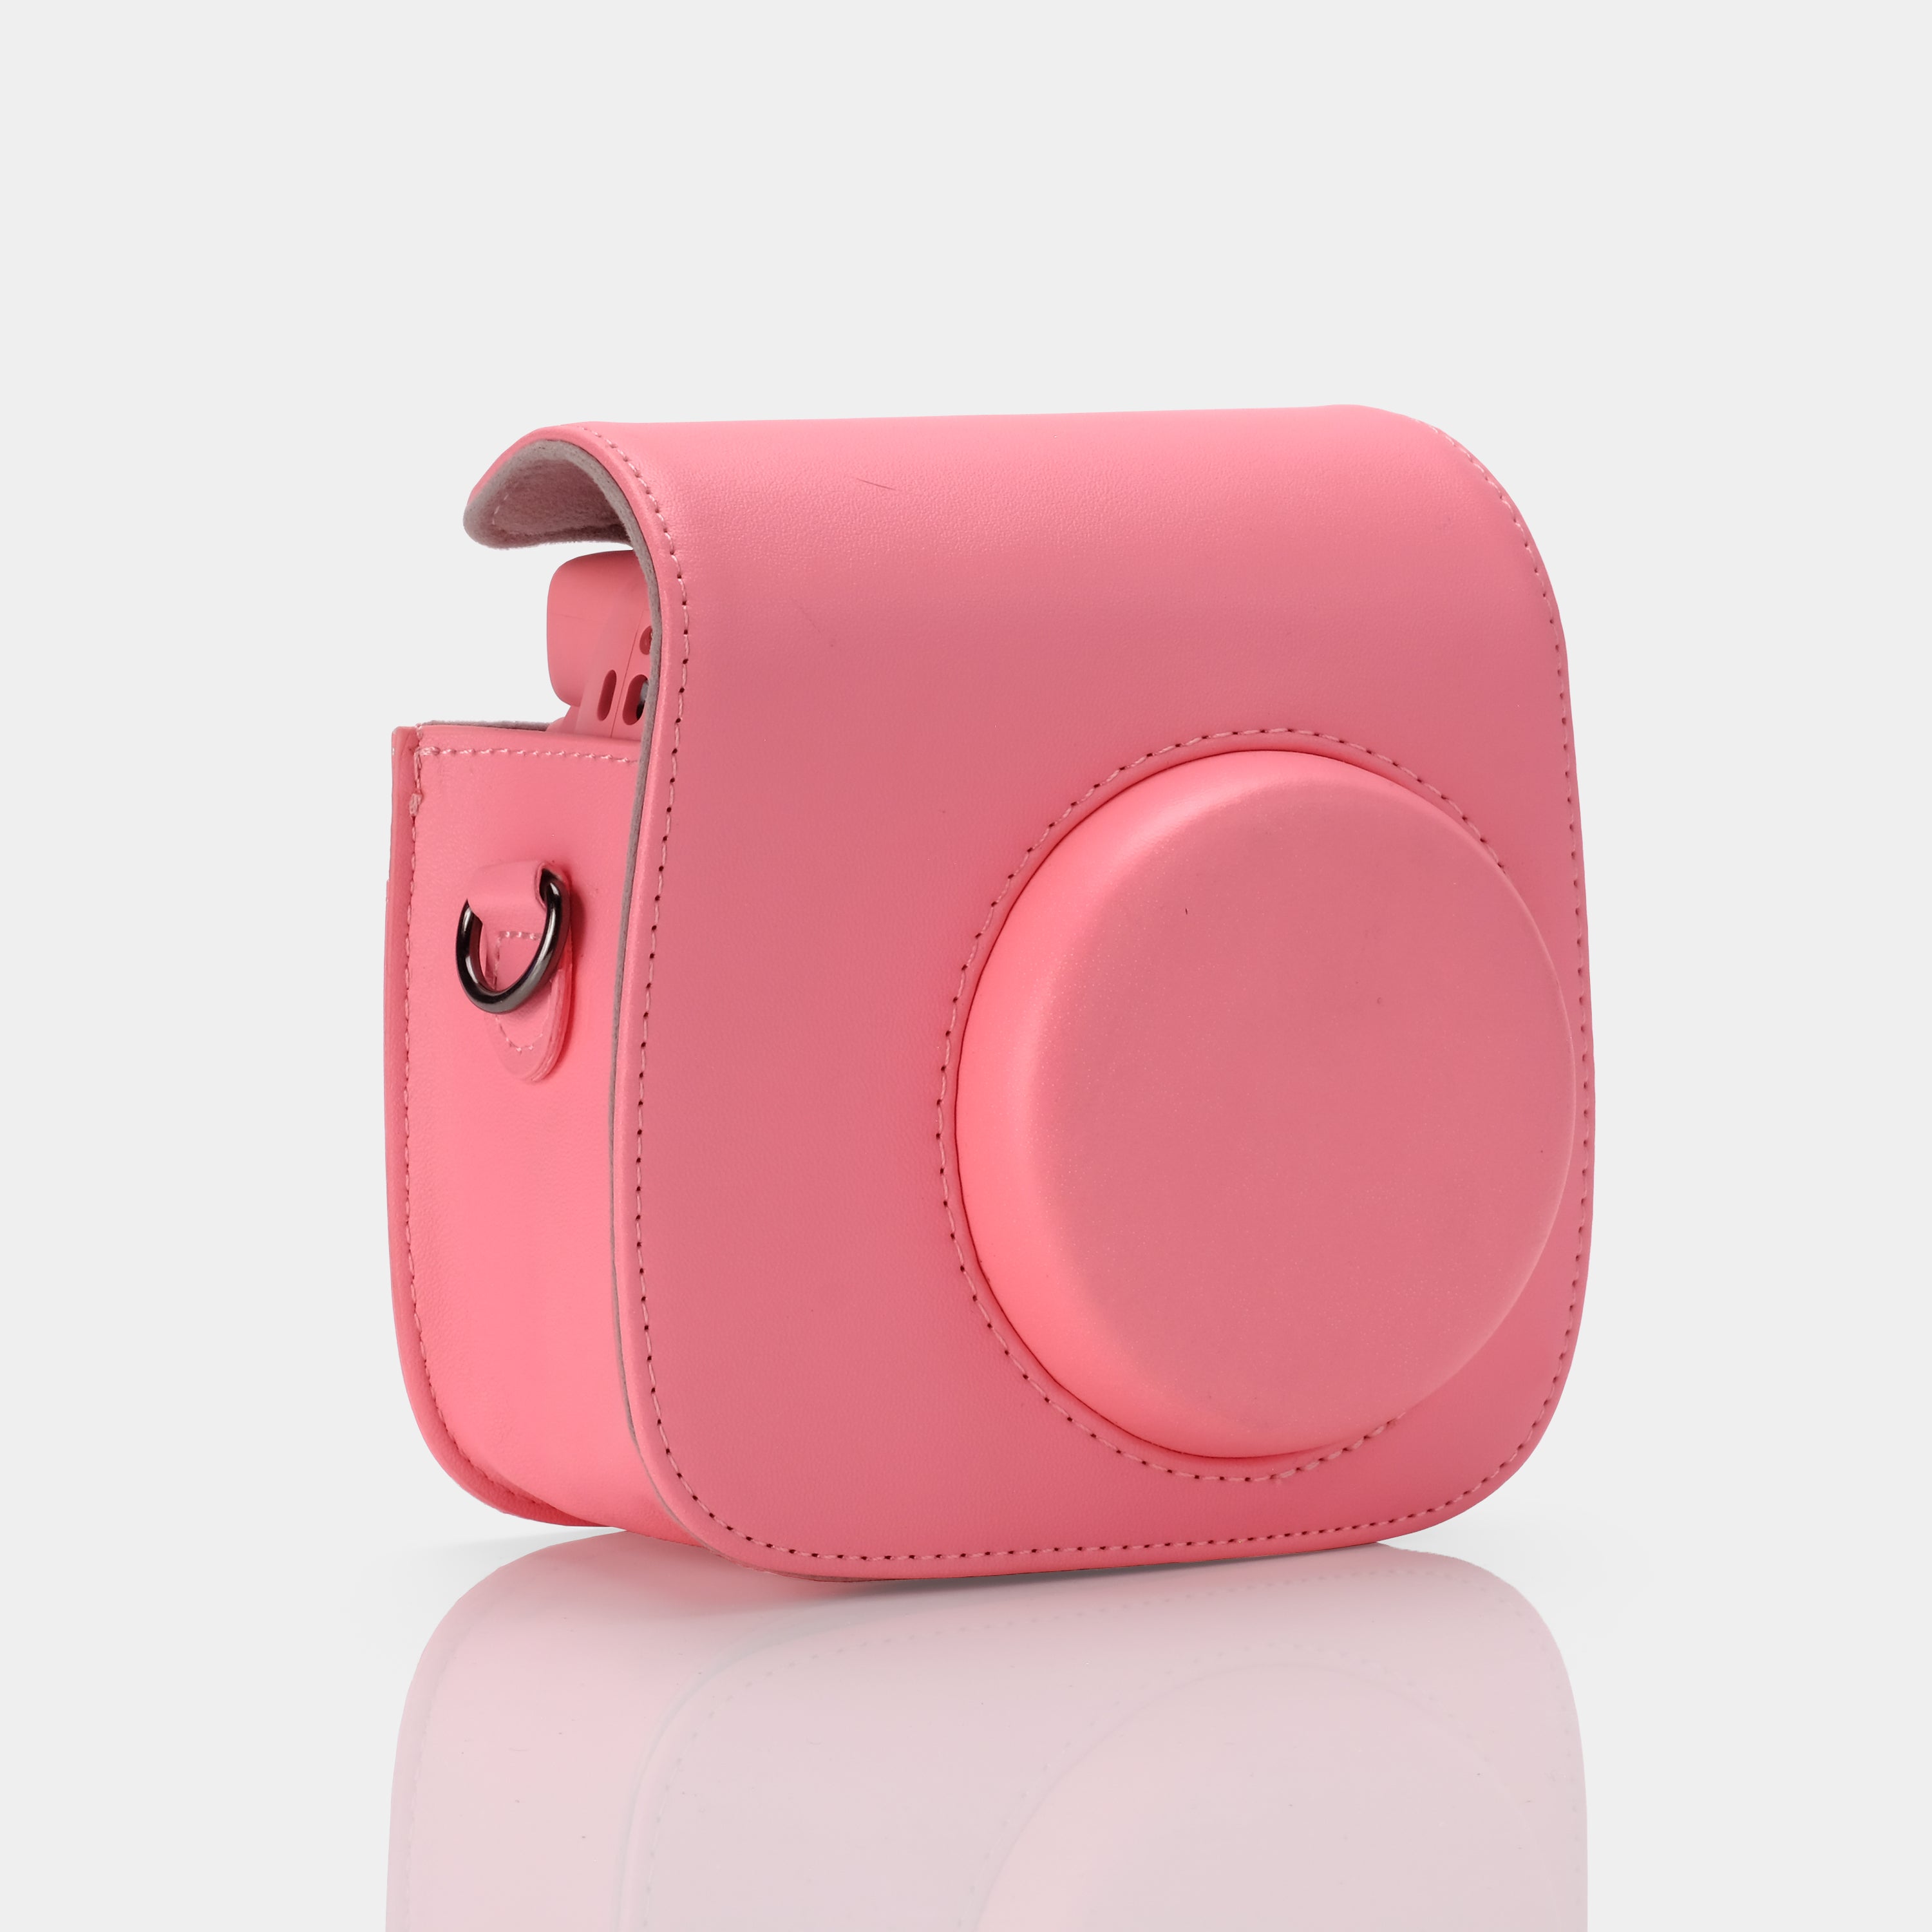 Fujifilm Instax Mini 9 Pink Instant Film Camera With Pink Bag - Refurbished